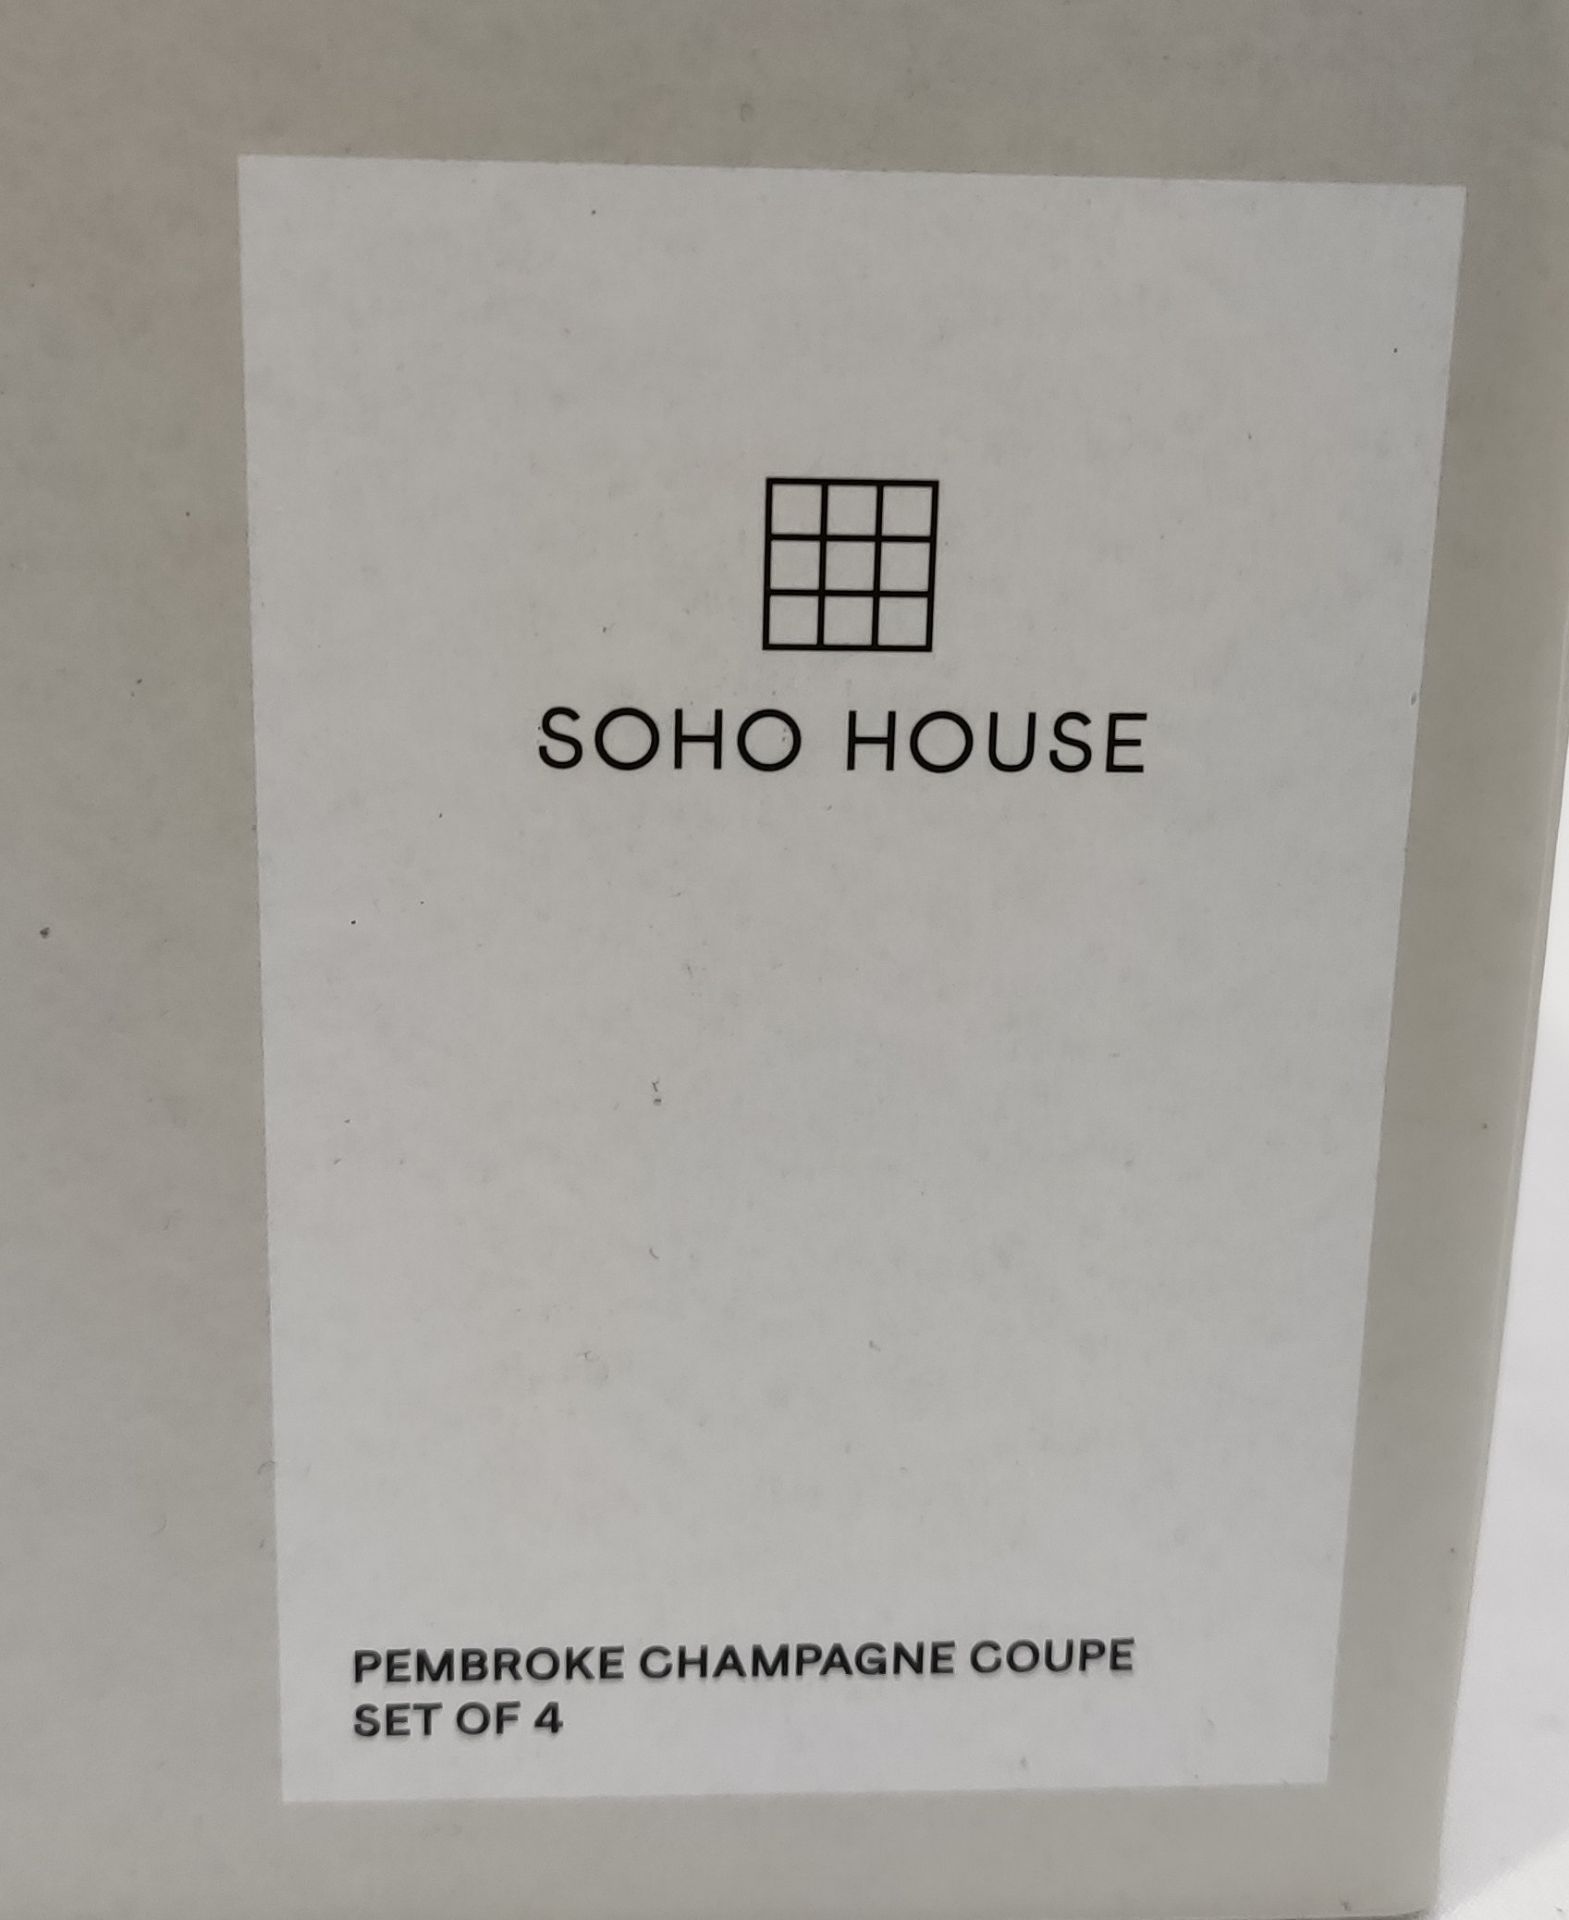 1 x SOHO HOME Pembroke Champagne Coupe - 3 Glasses - Boxed - Original RRP £72 - Ref: 6741245/ - Image 9 of 17